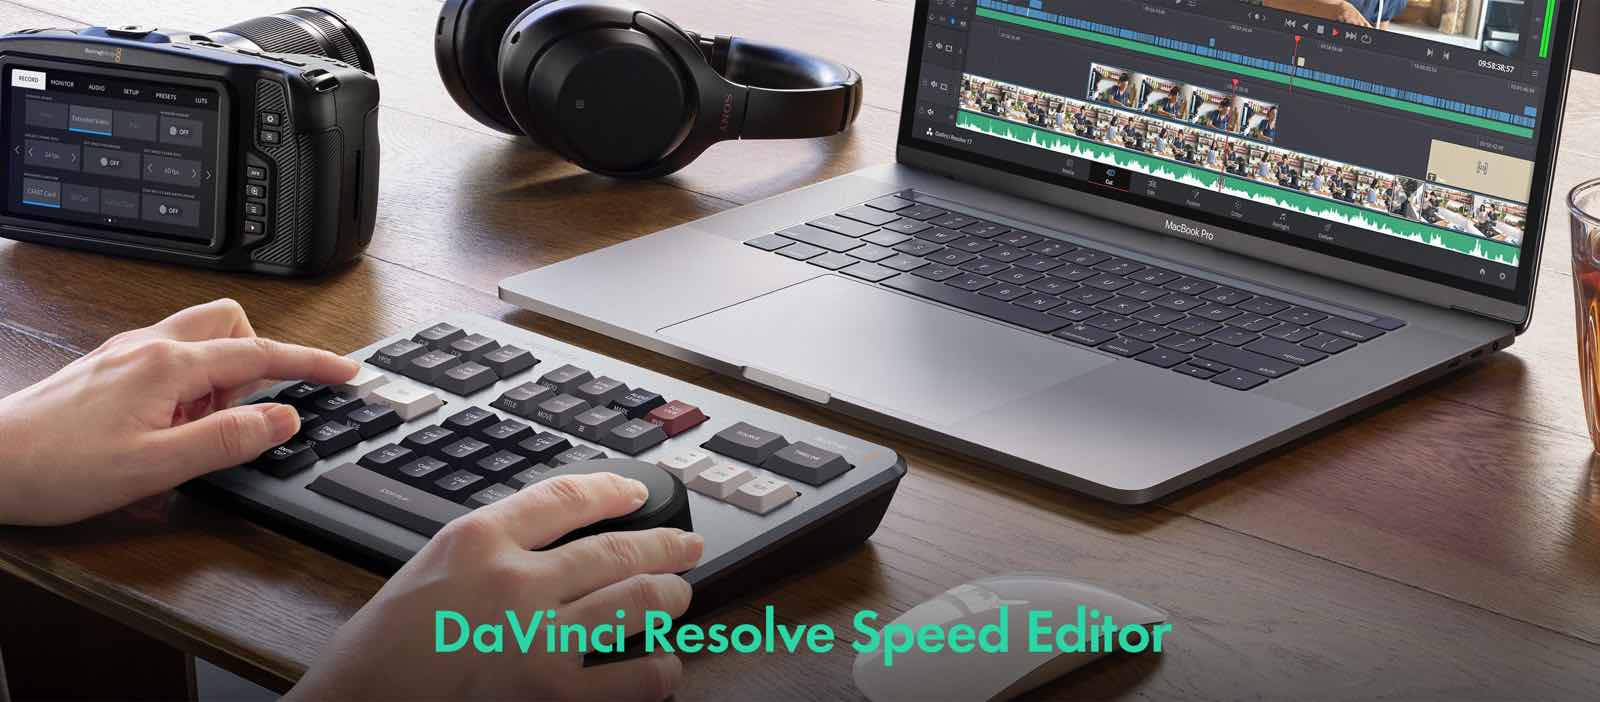 DaVinci Resolve 18.5.0.41 instal the new for mac